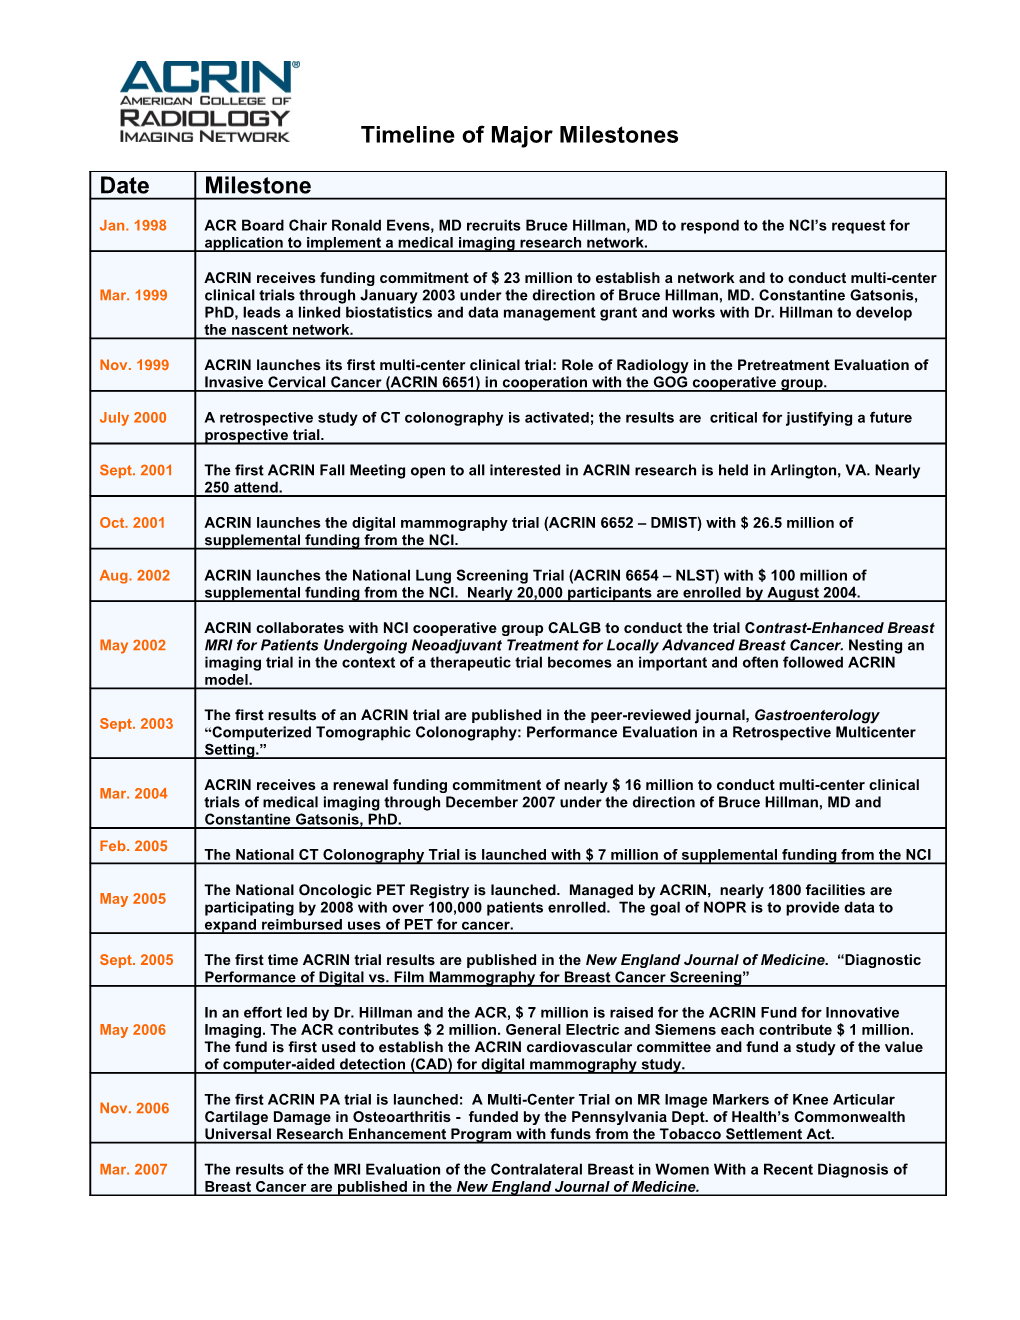 ACRIN Timeline of Major Milestones